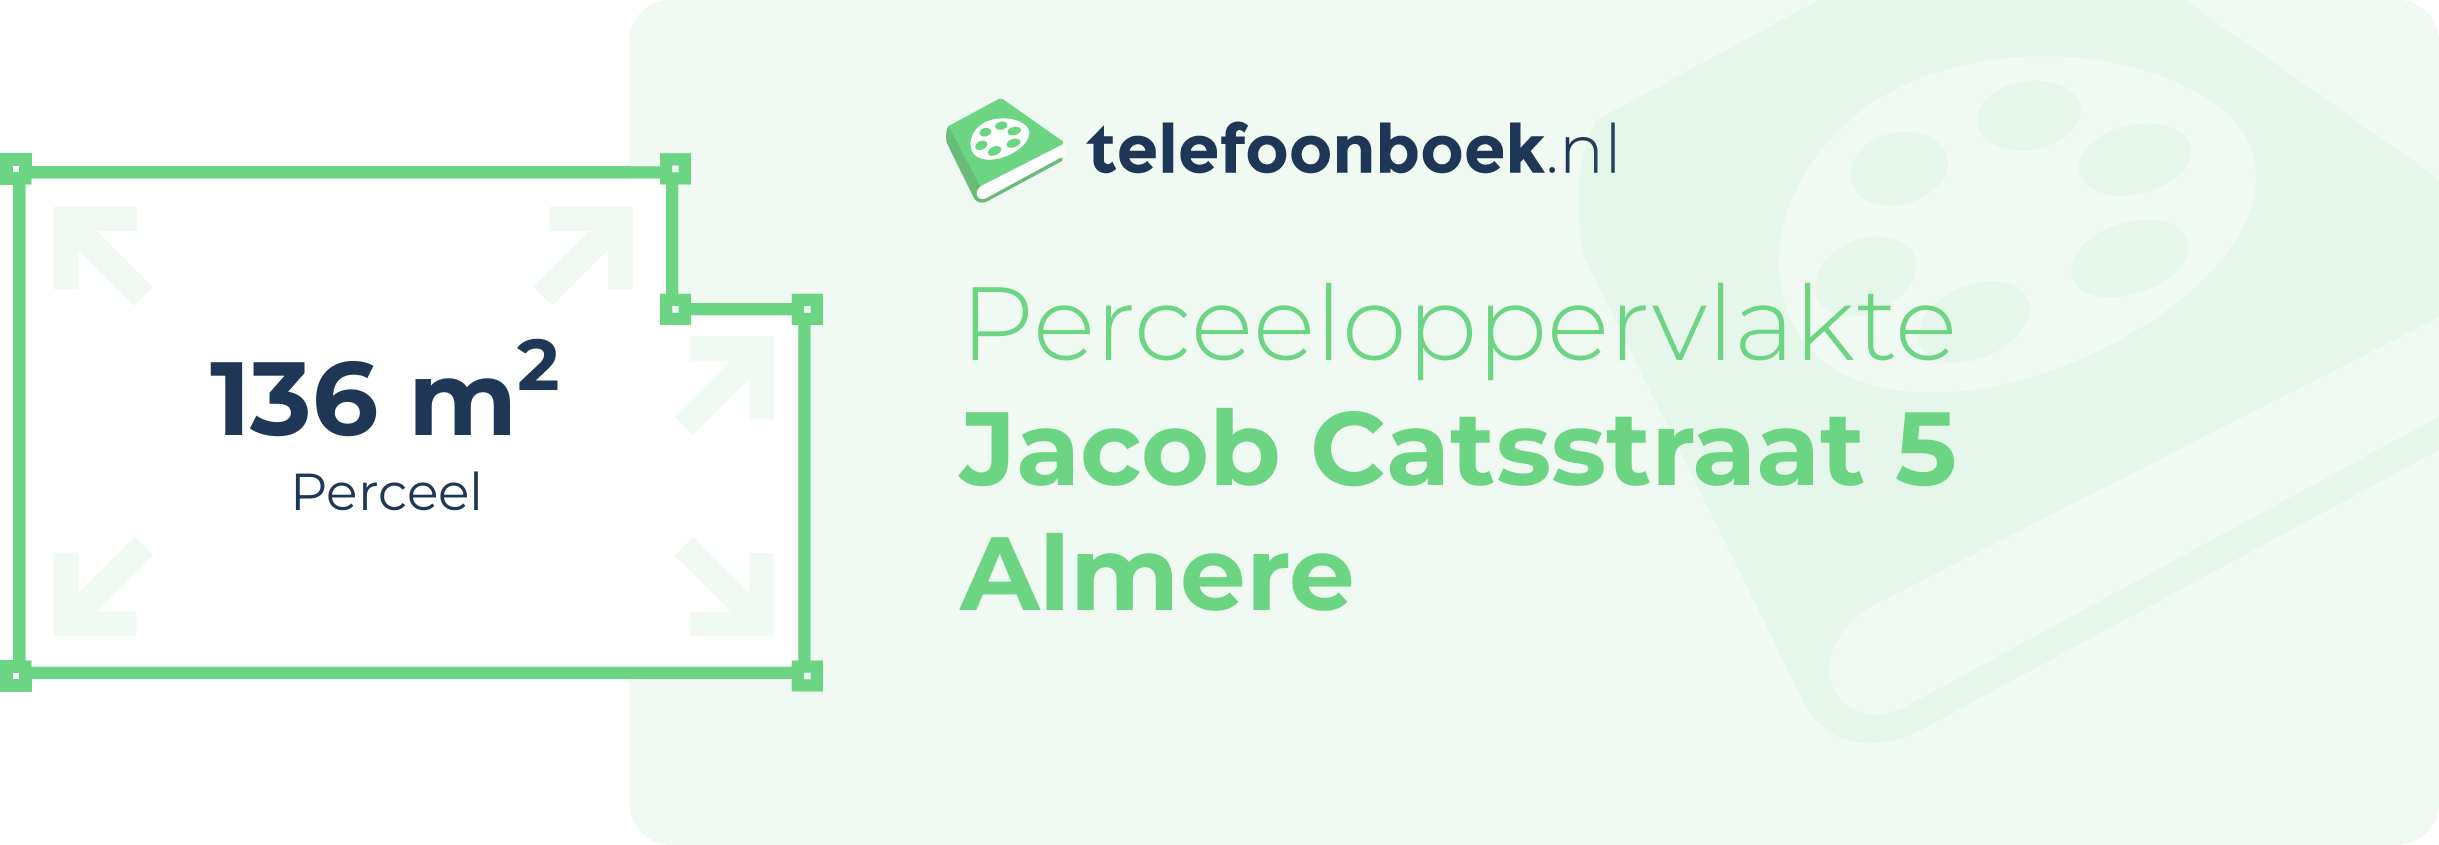 Perceeloppervlakte Jacob Catsstraat 5 Almere